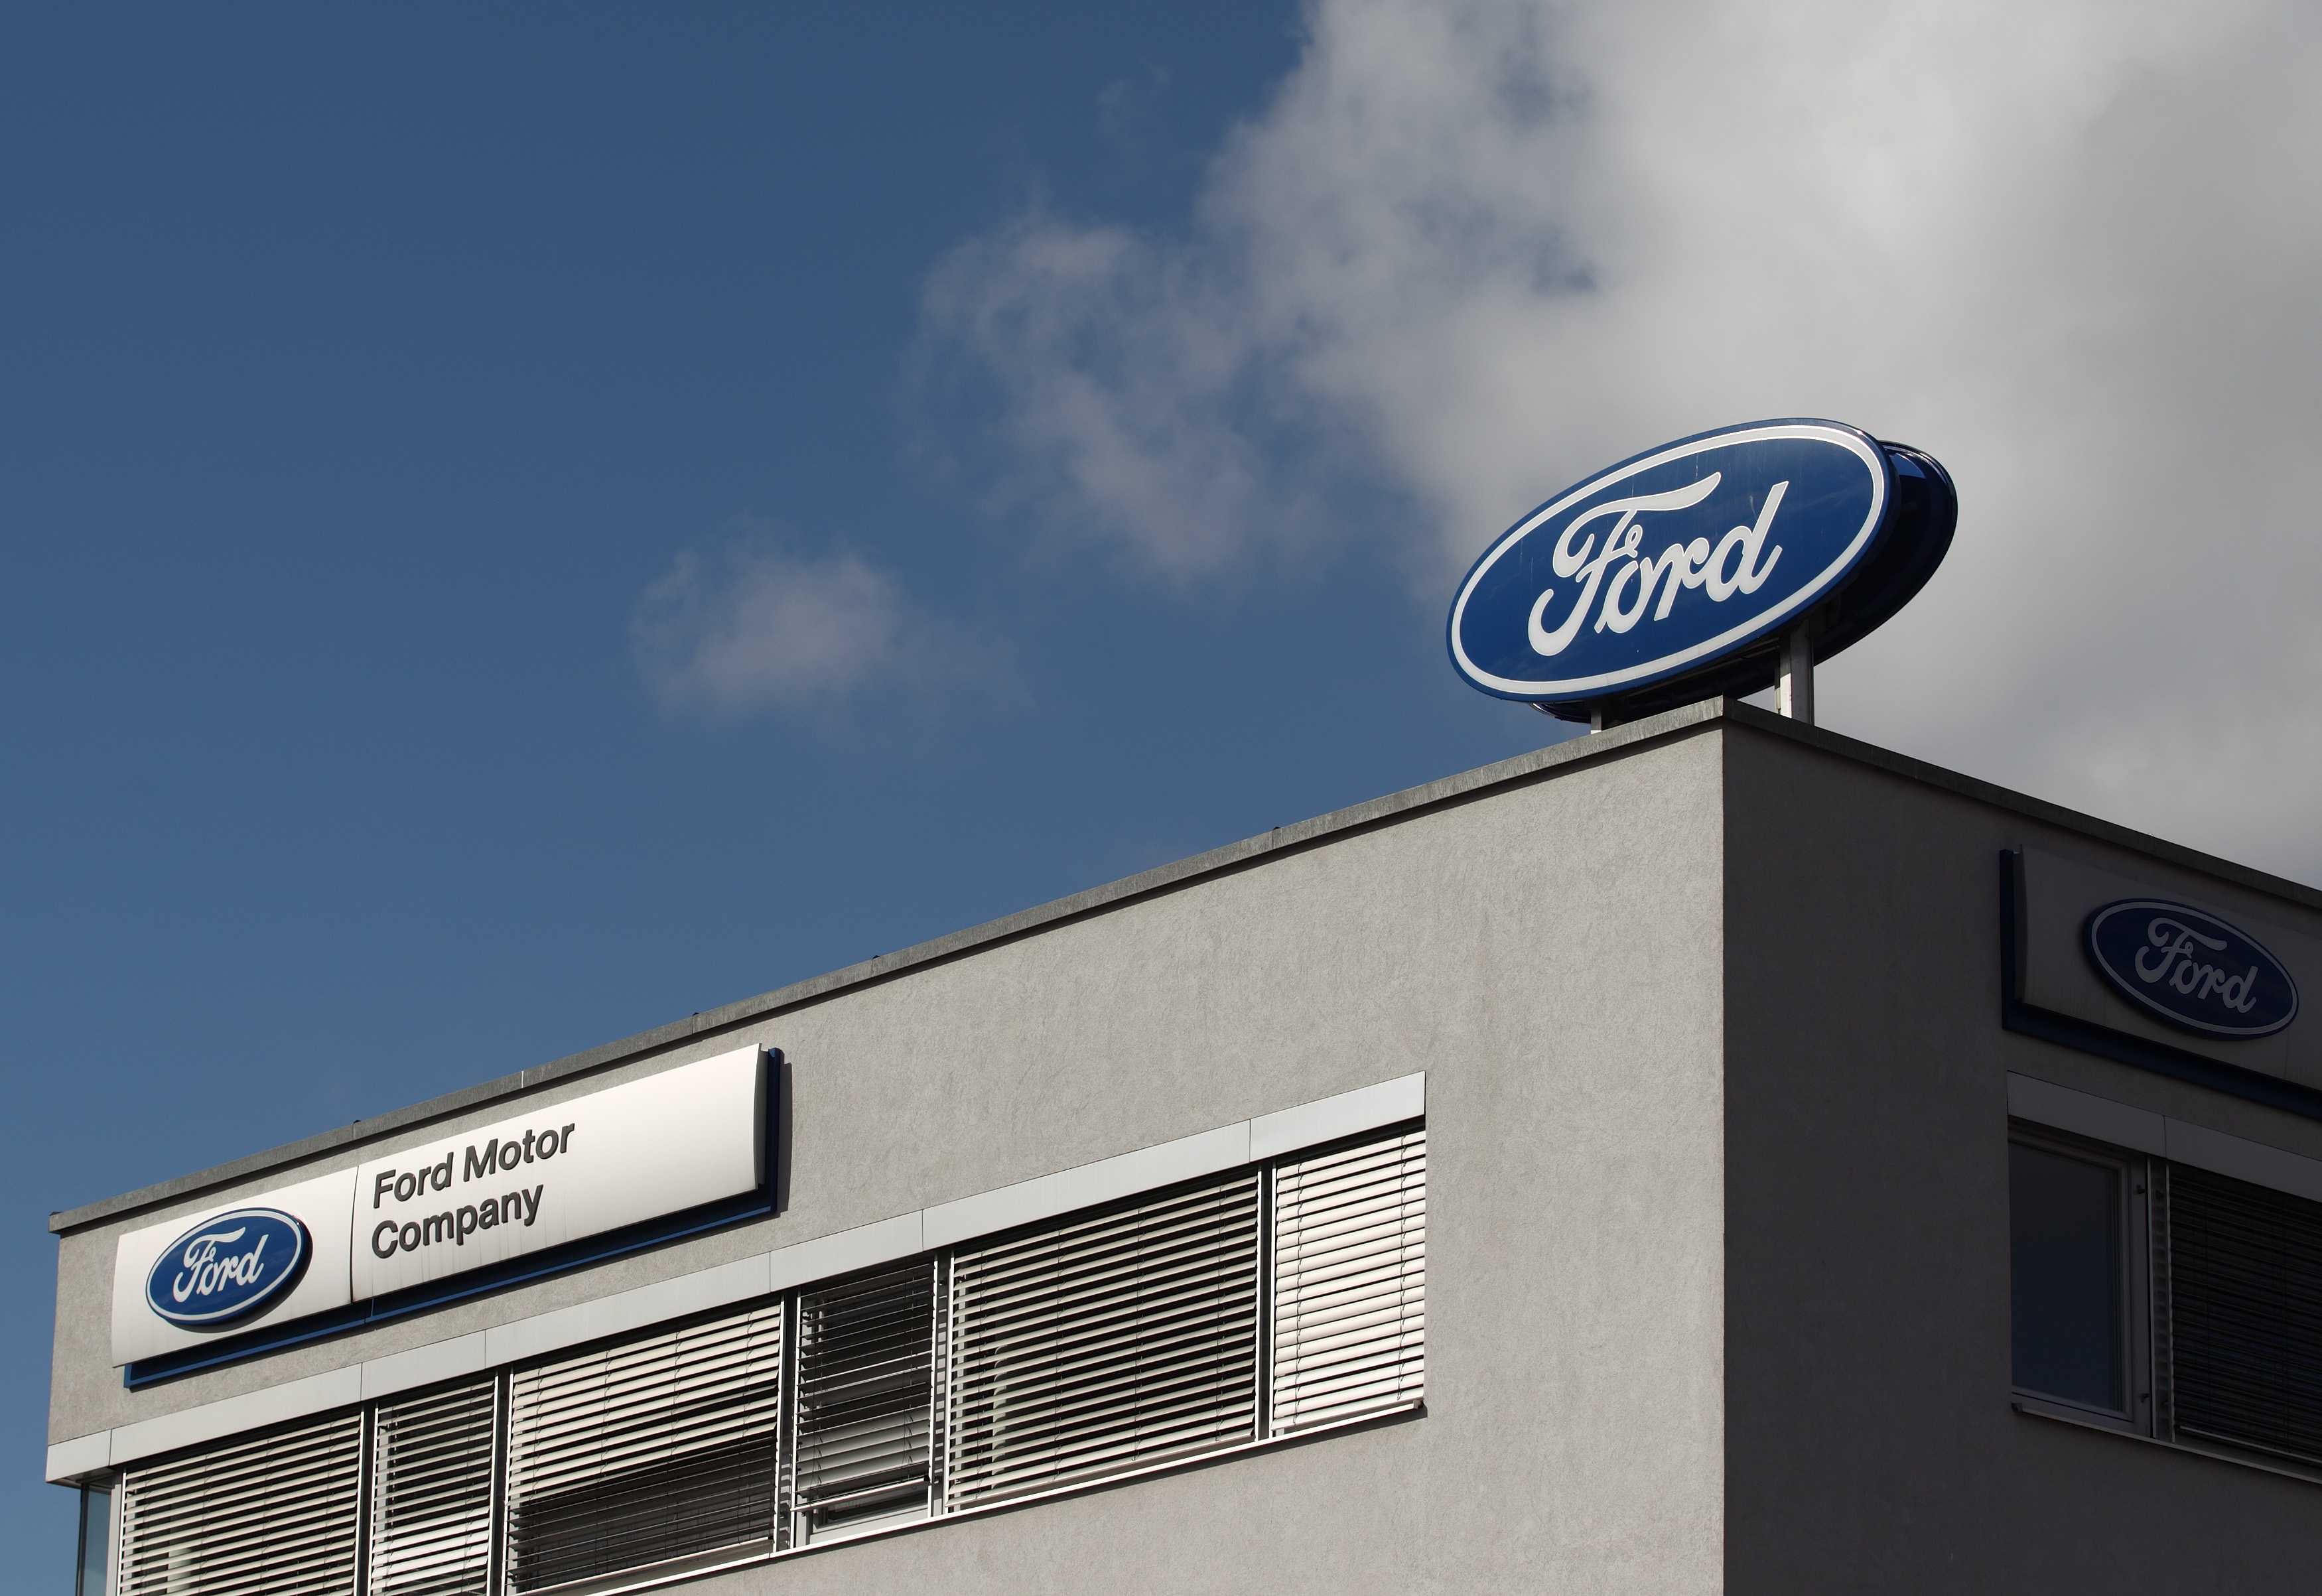 Форд моторс производитель. ТНК Ford Motor Company. Ford Motor Company 1903. 1903 — Основана «the Ford Motor Company».. Ford Motor Company (США).